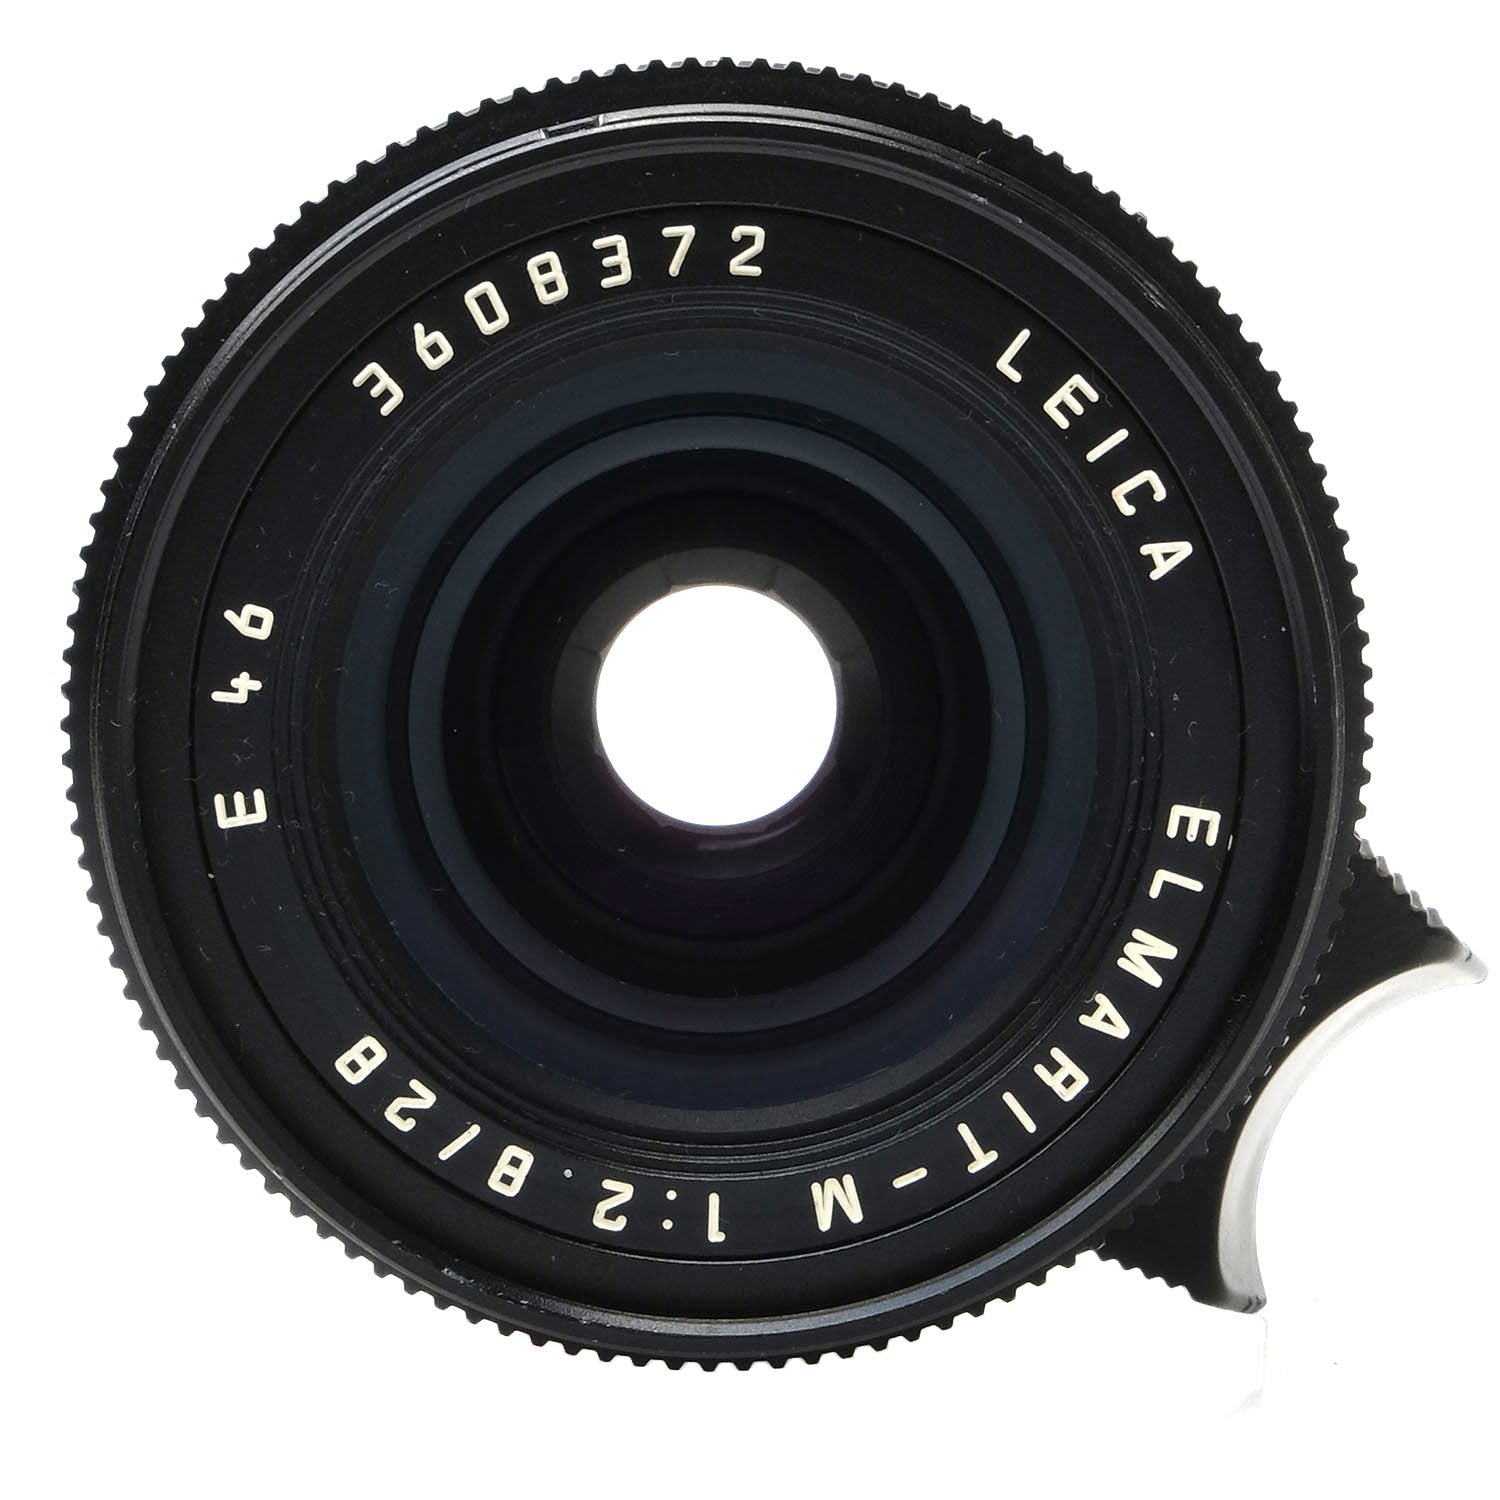 Leica 28mm f2.8 Elmarit-M 4th, Hood, Case 3608372